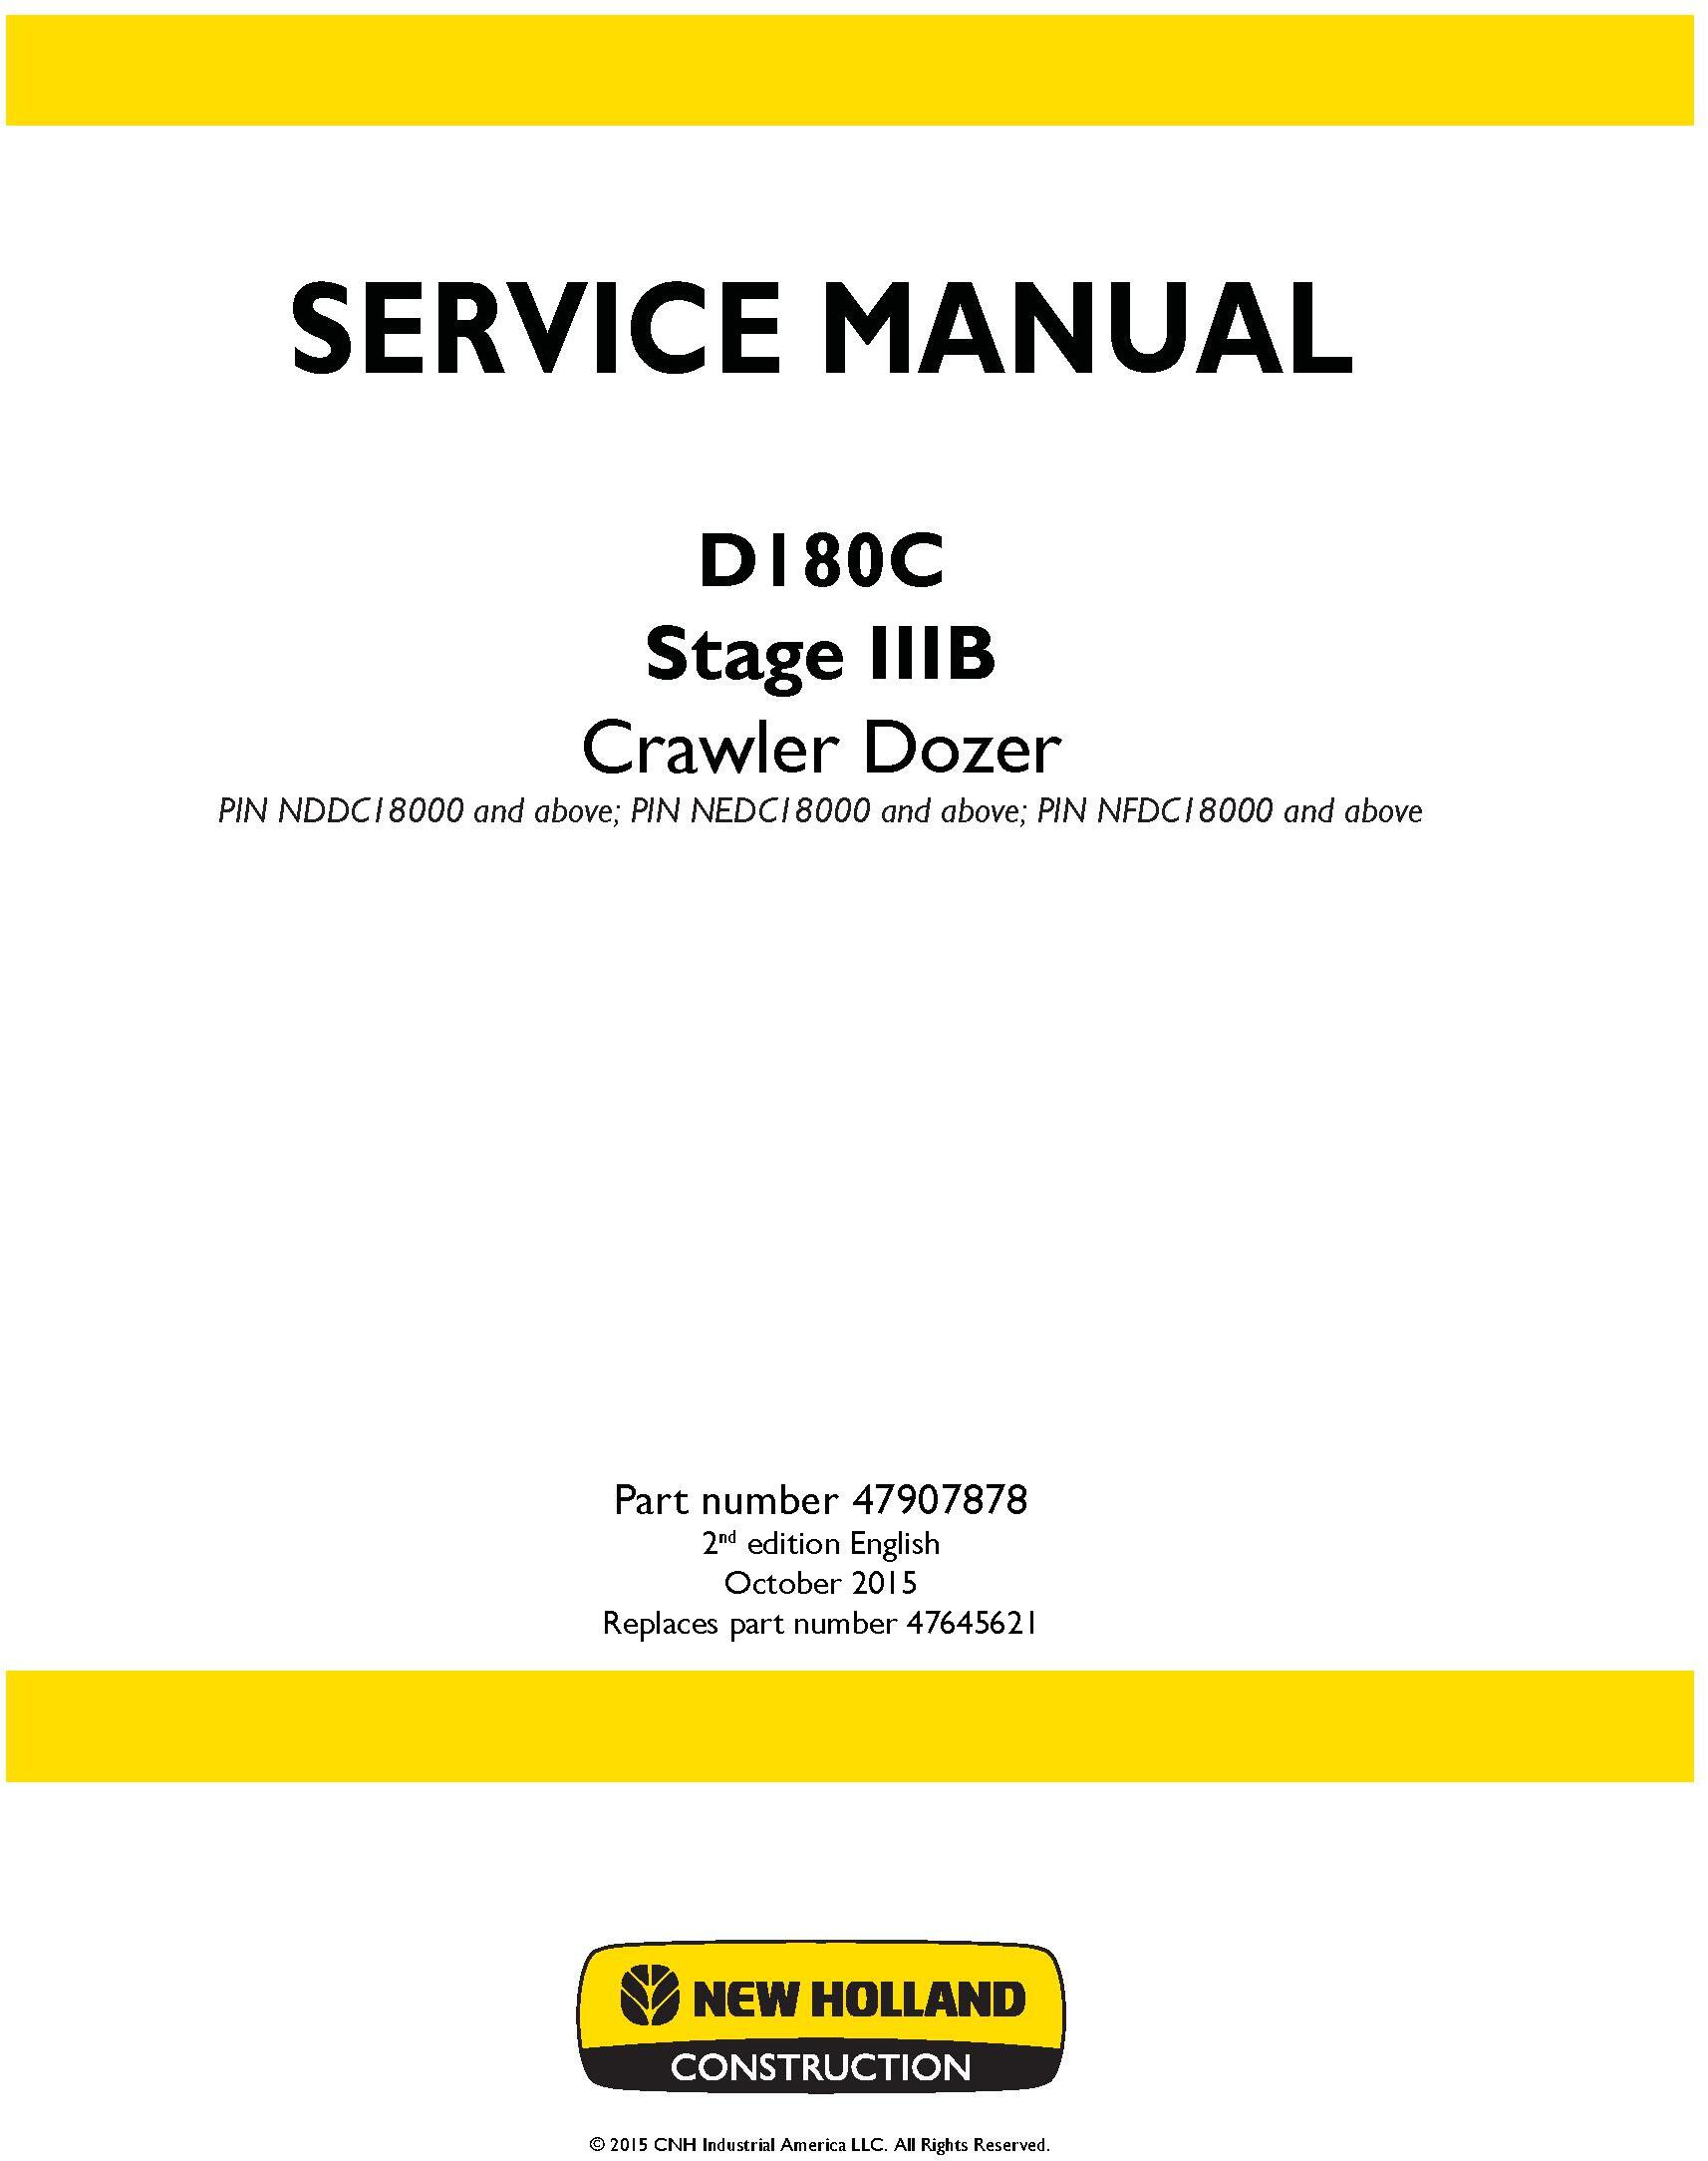 New Holland D180C Stage IIIB Crawler dozer Service Manual